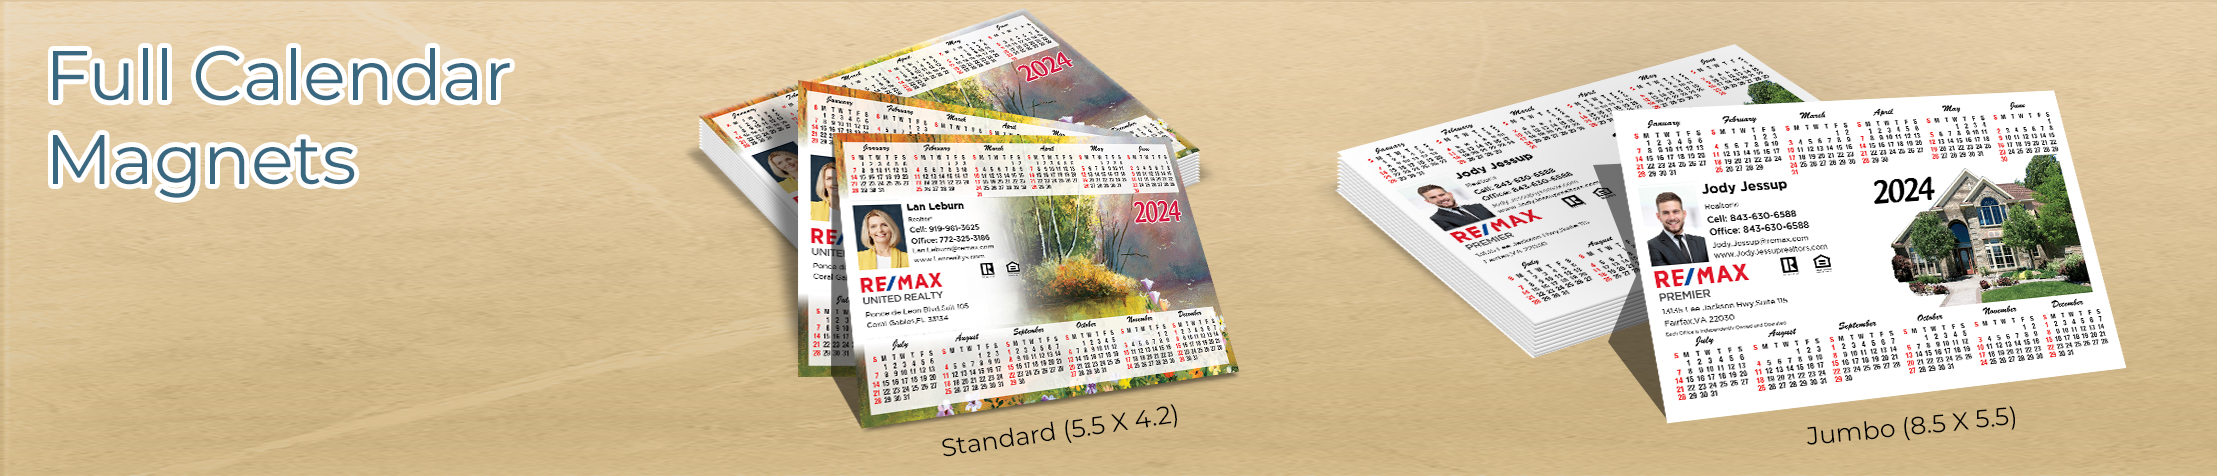 RE/MAX Real Estate Full Calendar Magnets - RE/MAX 2019 calendars in Standard or Jumbo Size | BestPrintBuy.com